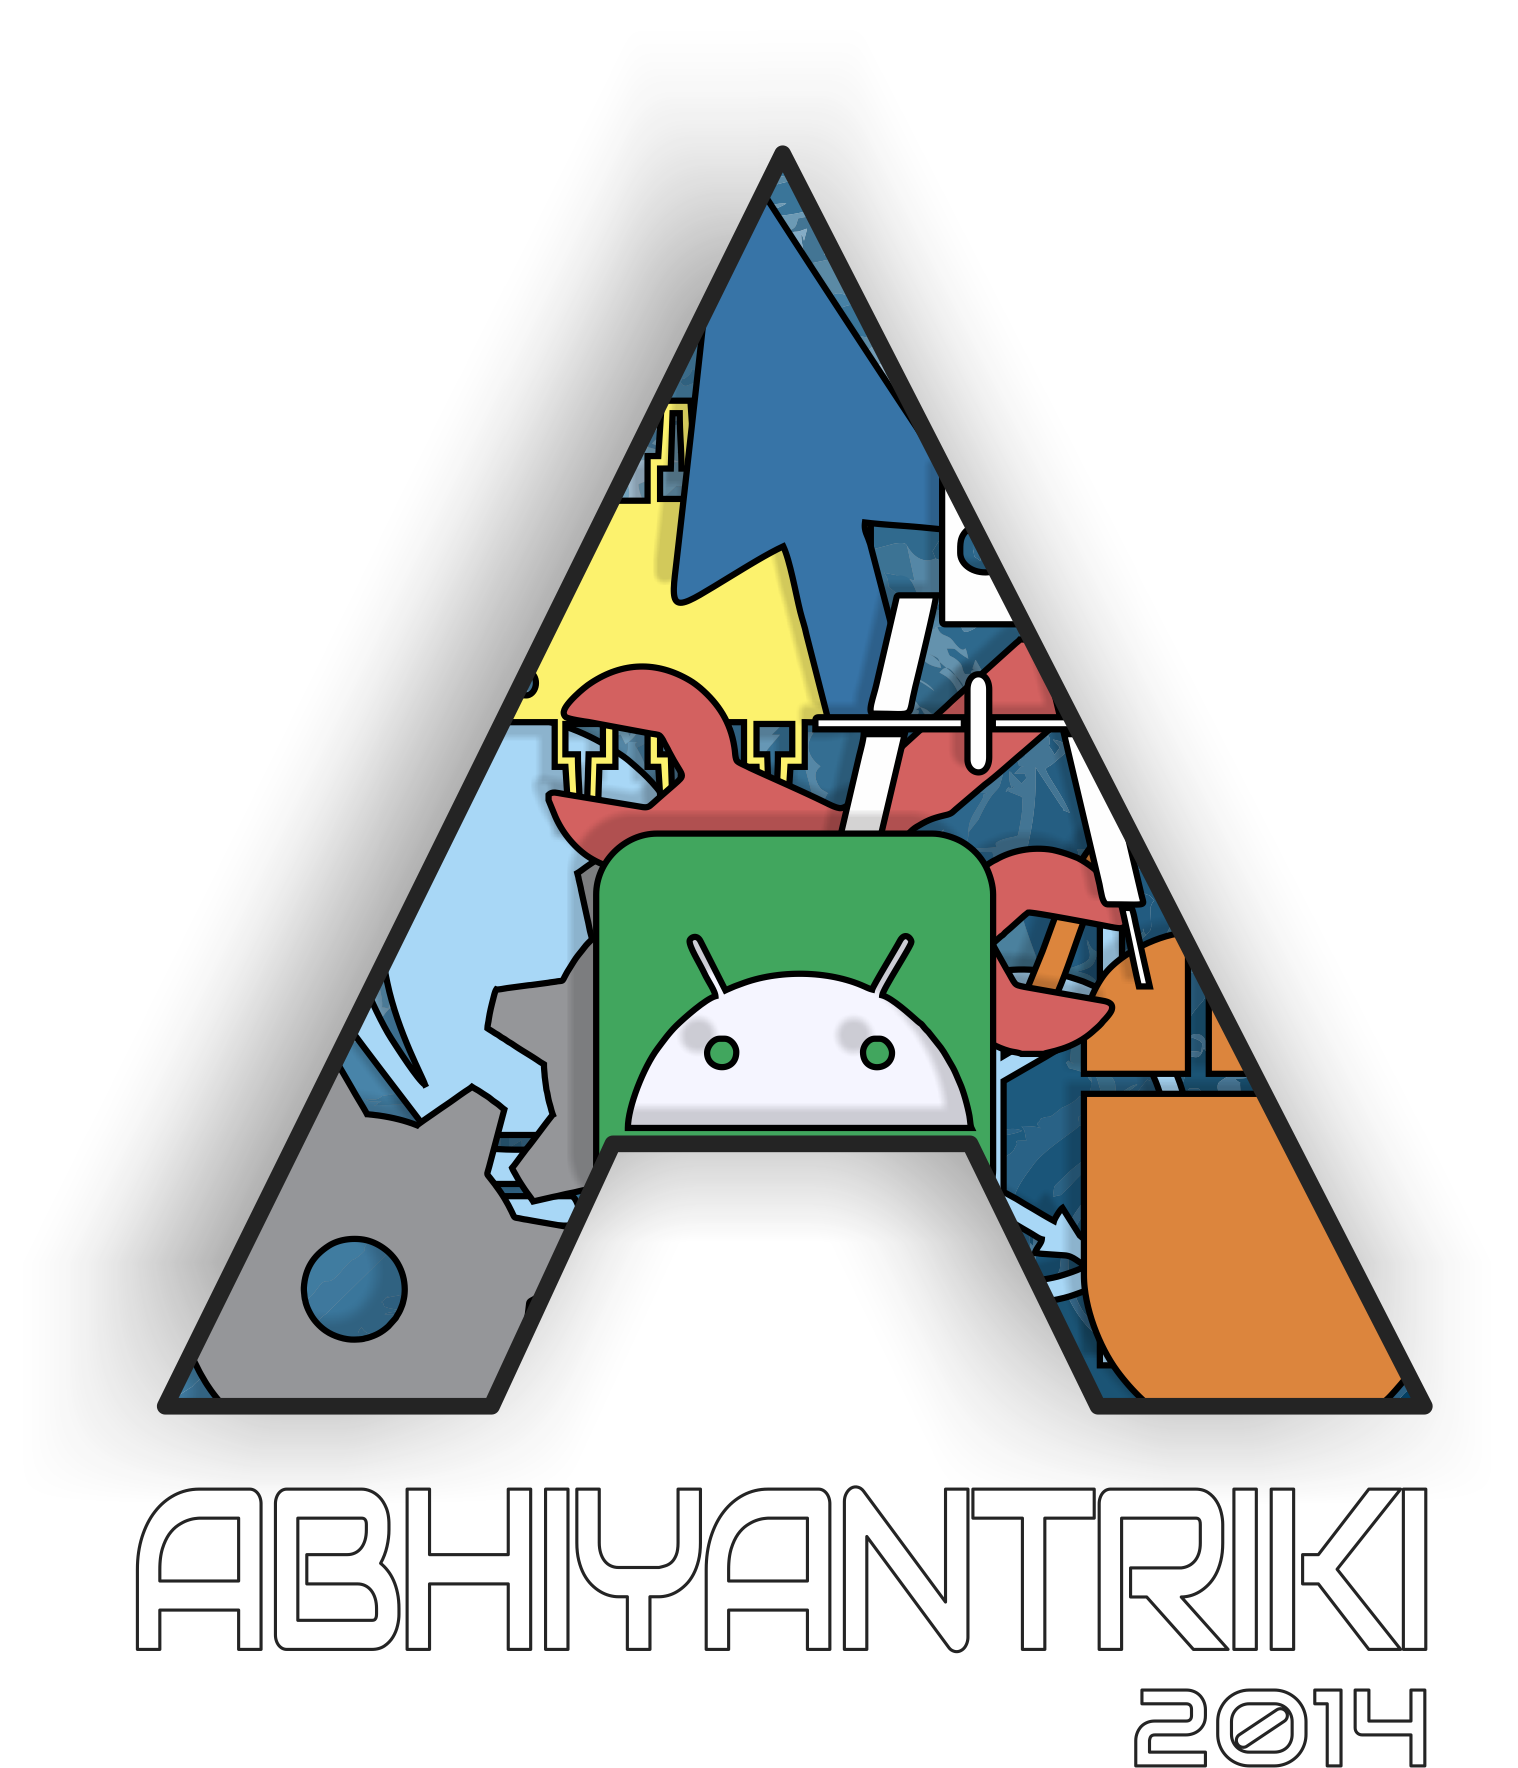 Abhiyantriki